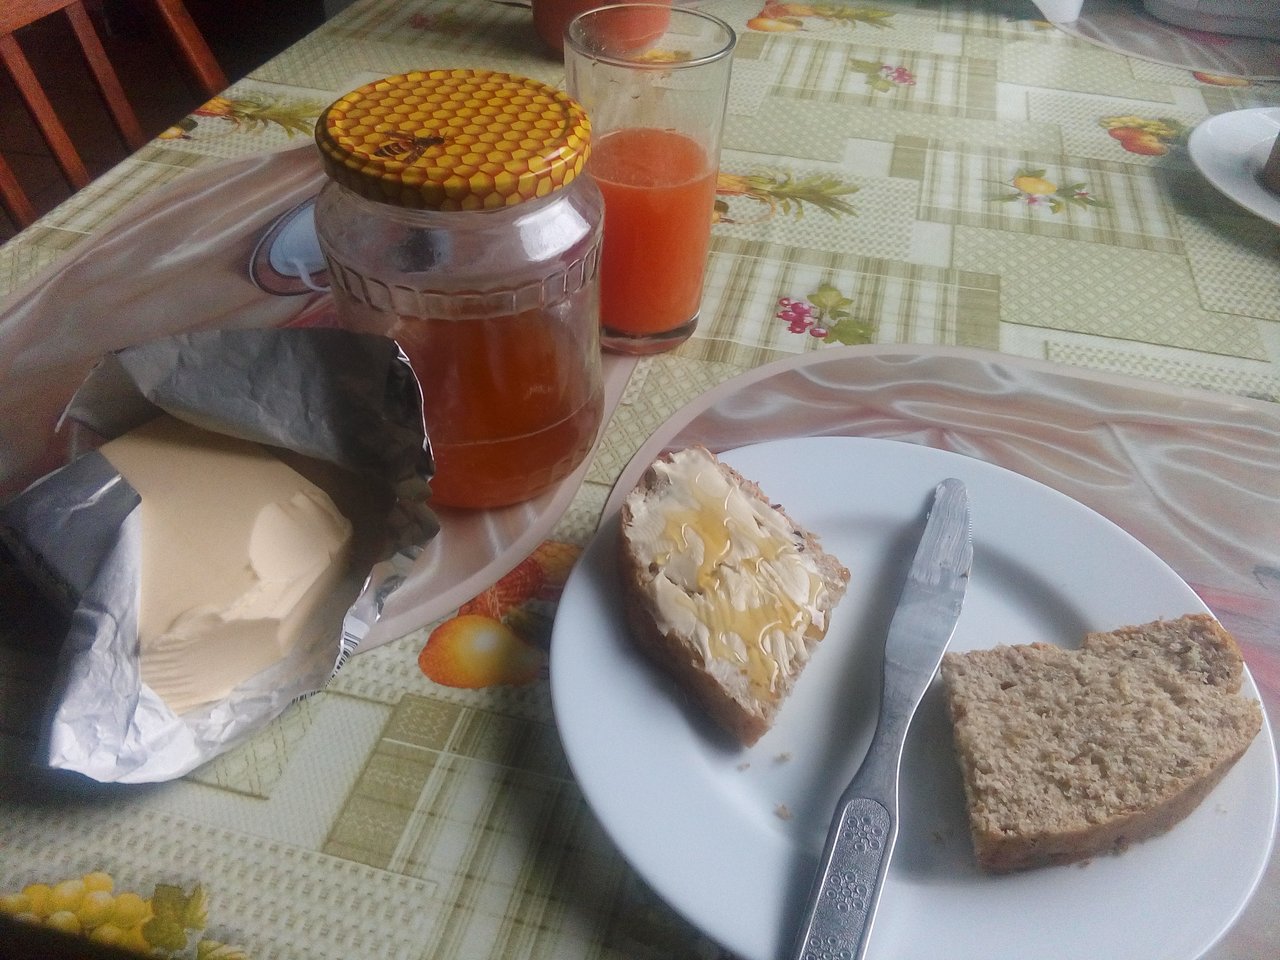 Cesnakovy chleba s maslom a medom :D
